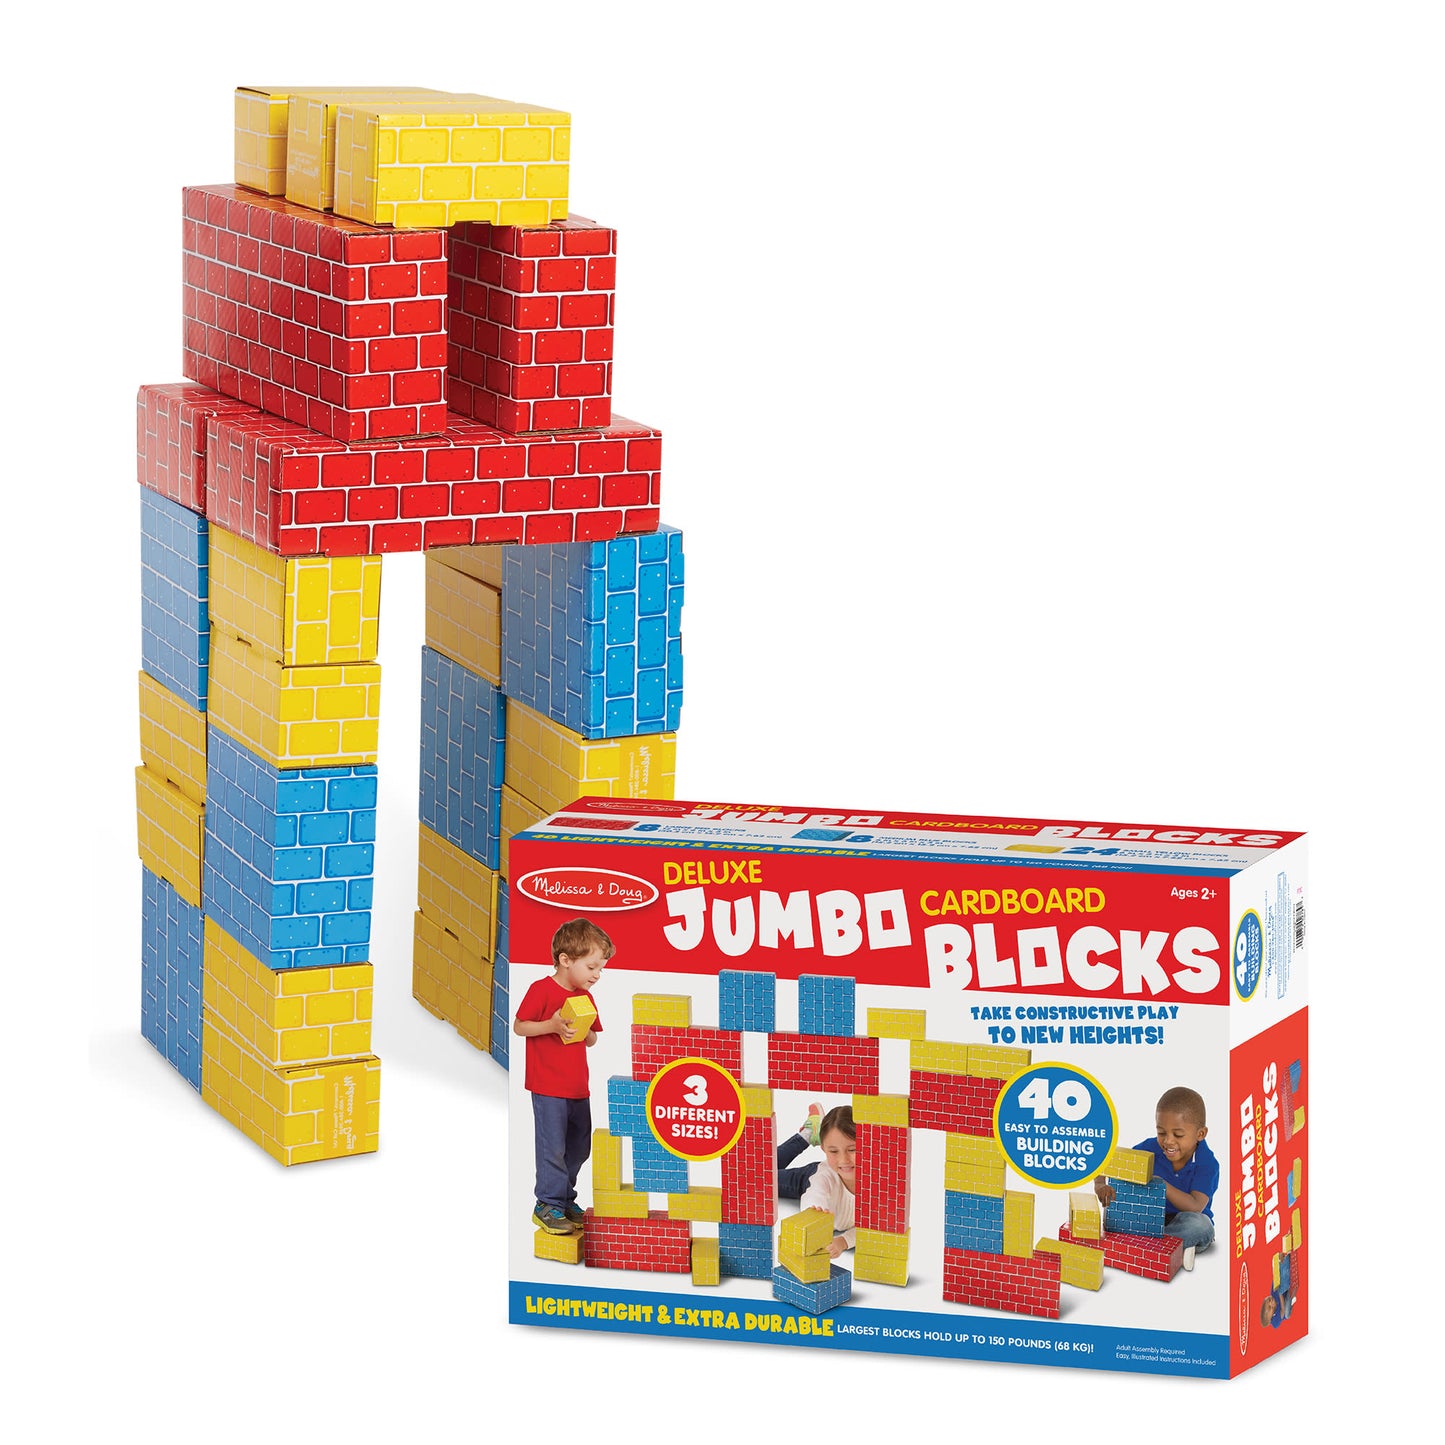 Deluxe Jumbo Cardboard Blocks 40Pc.